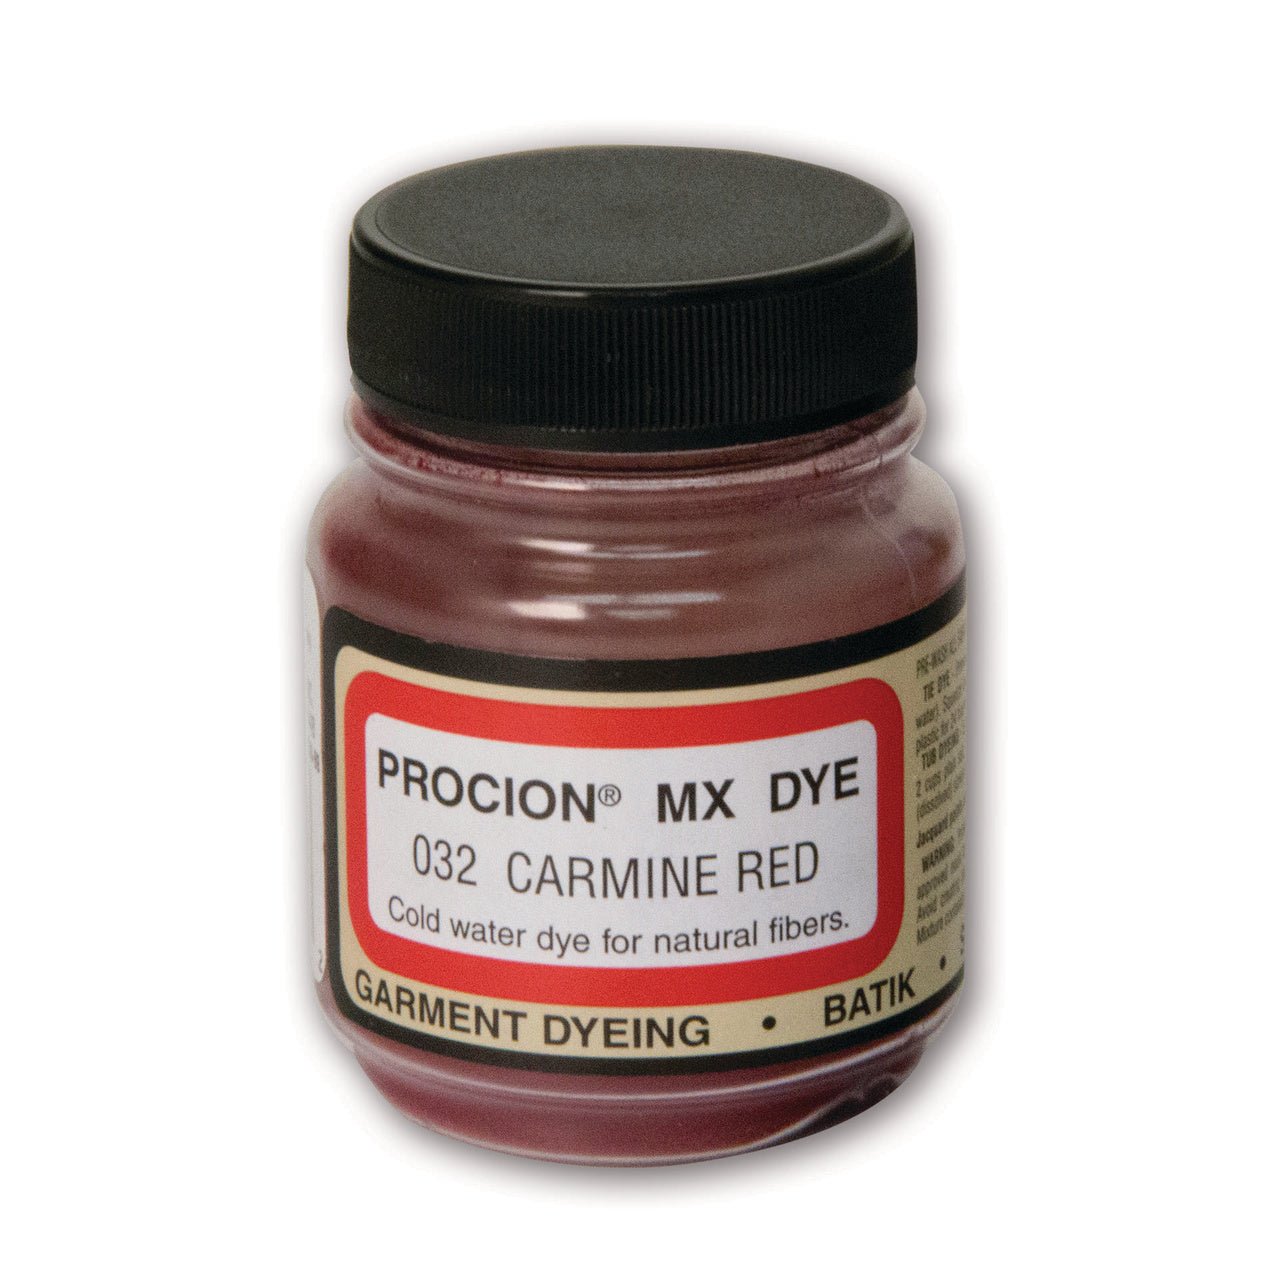 Jacquard Procion MX Dye 2/3 oz - Carmine Red - merriartist.com